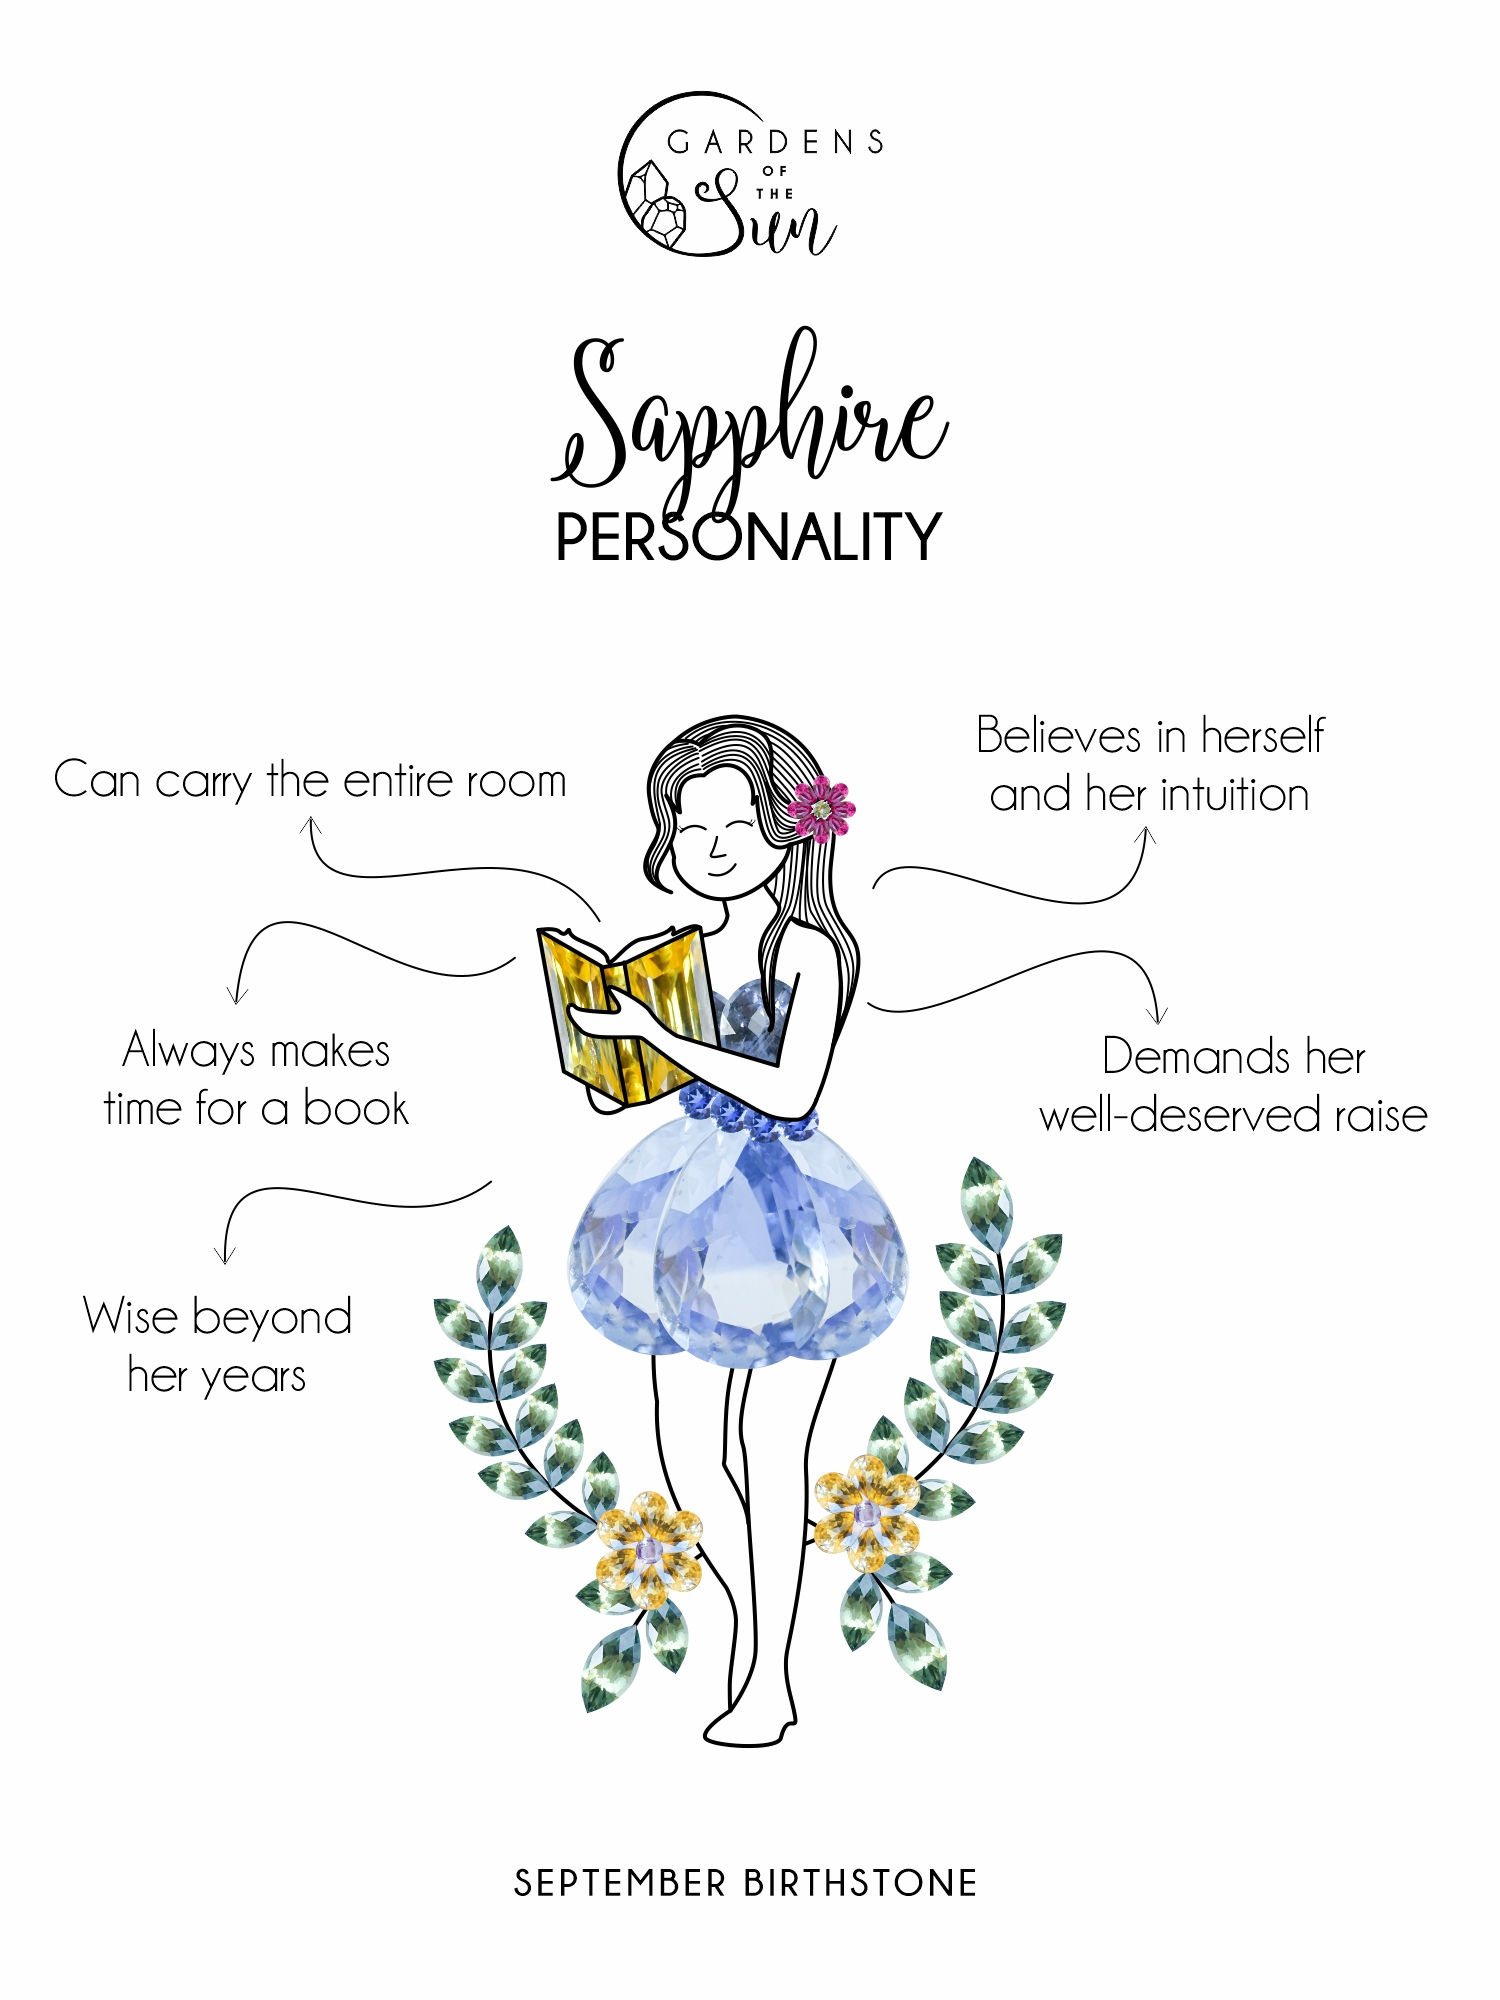 sapphire traits